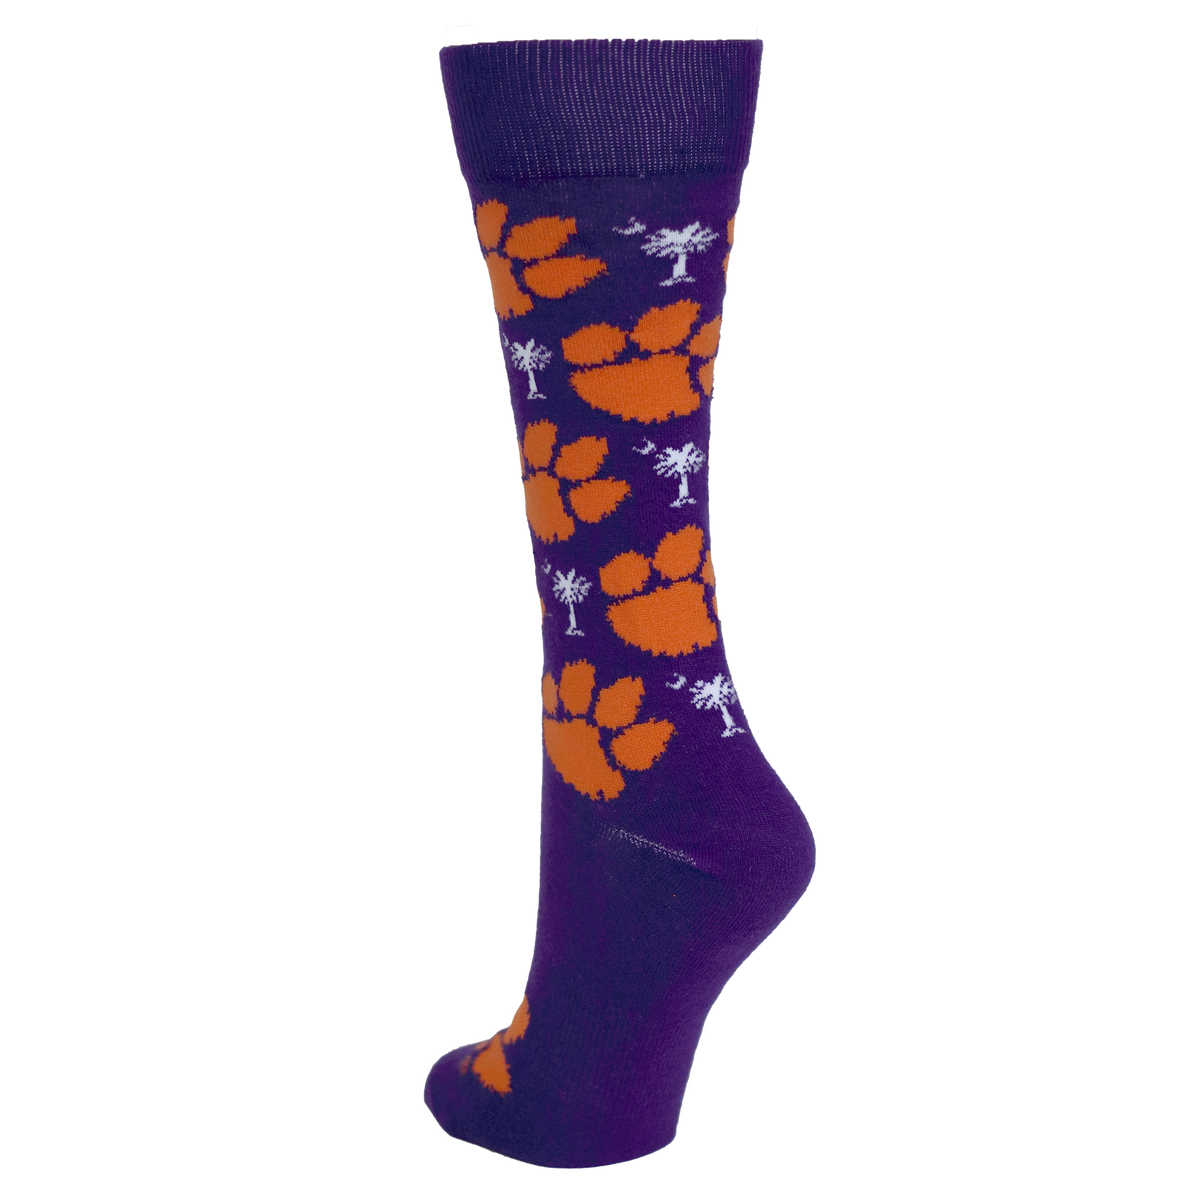 Clemson Purple Socks with Orange Paw and Palmetto